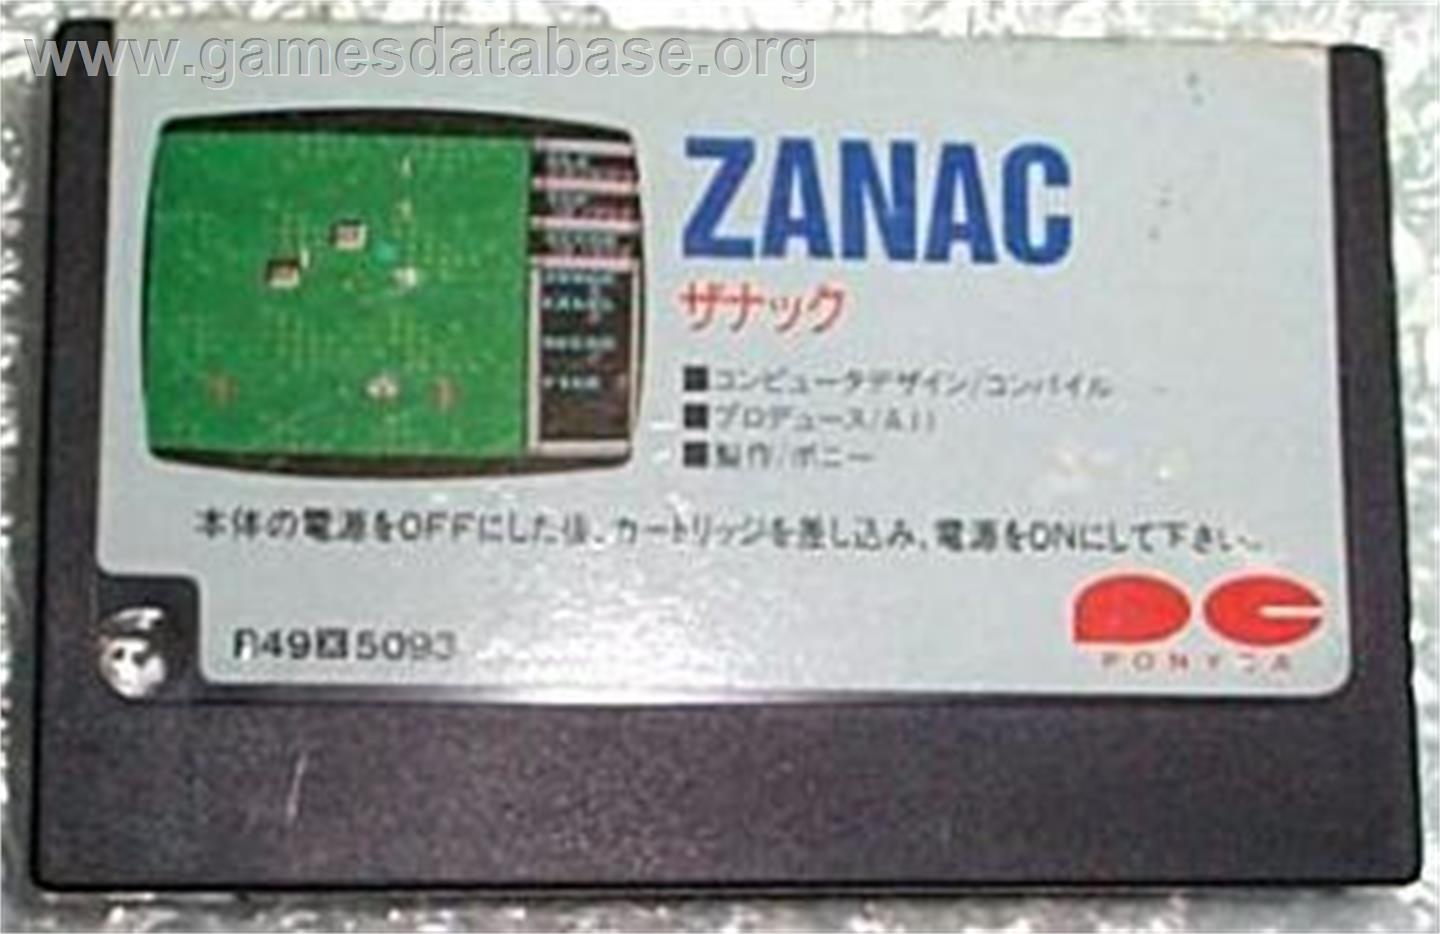 Zanac EX - MSX - Artwork - Cartridge